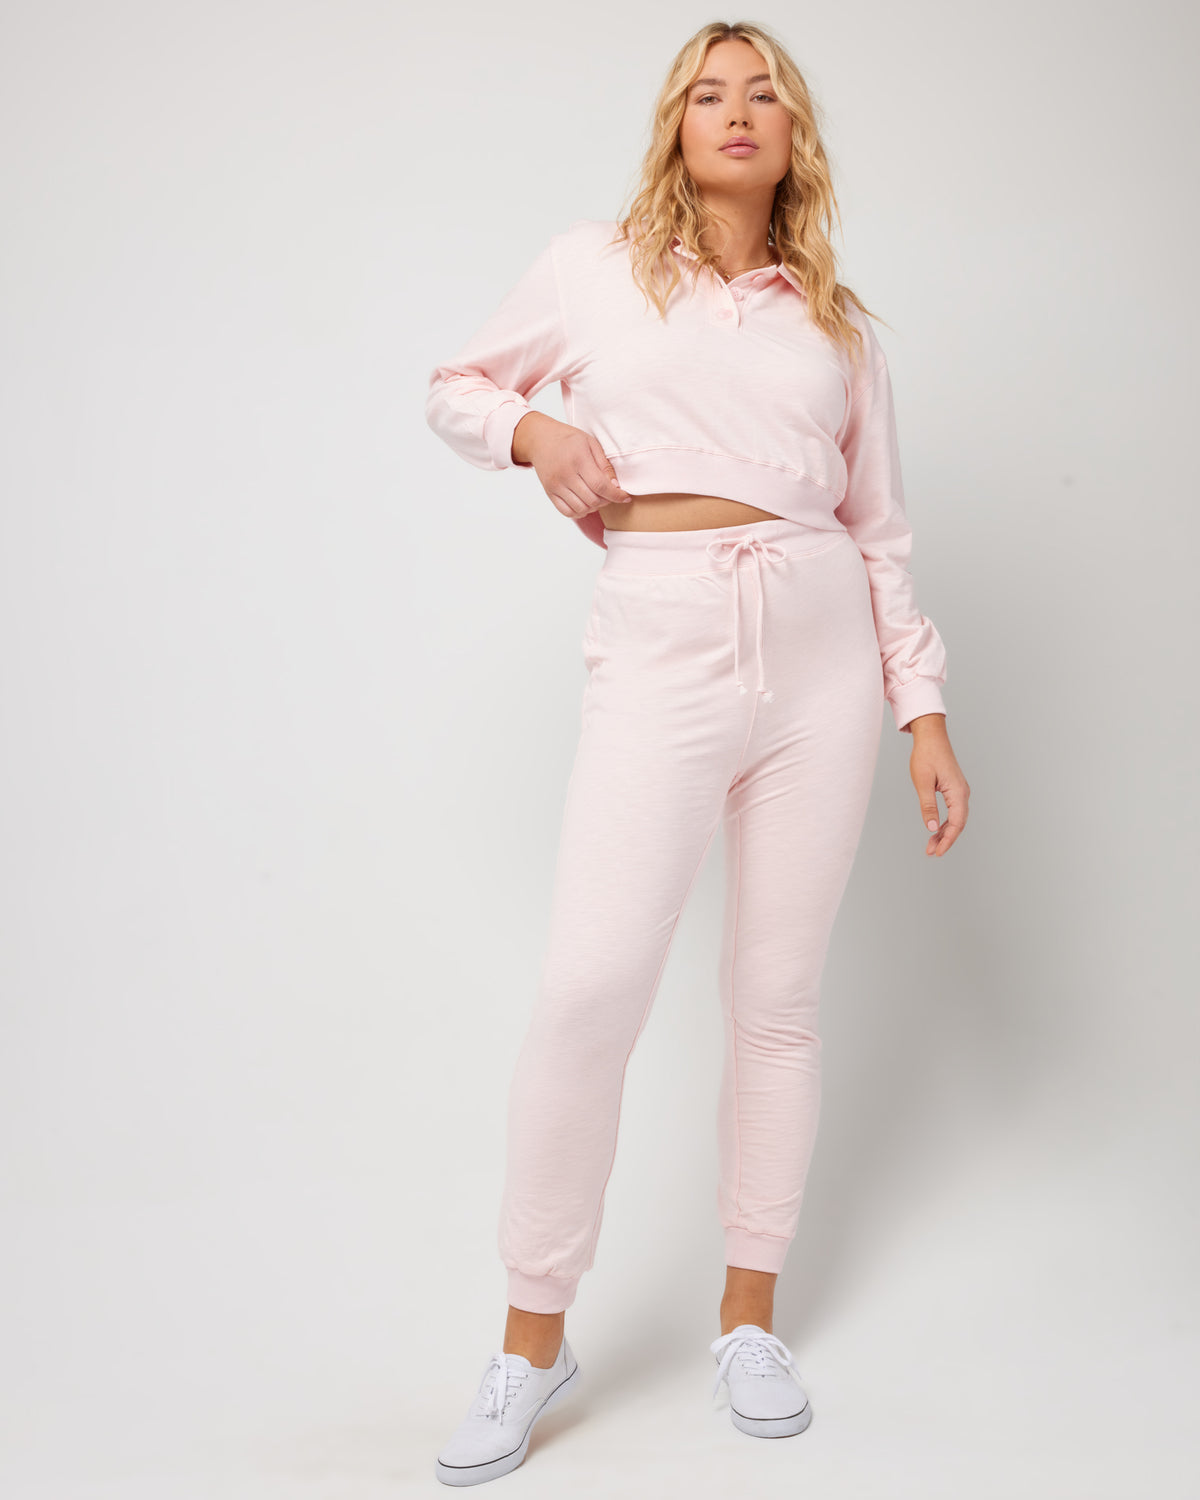 Livin Is Easy Pullover Rose Quartz | Model: Sydney (size: XL)